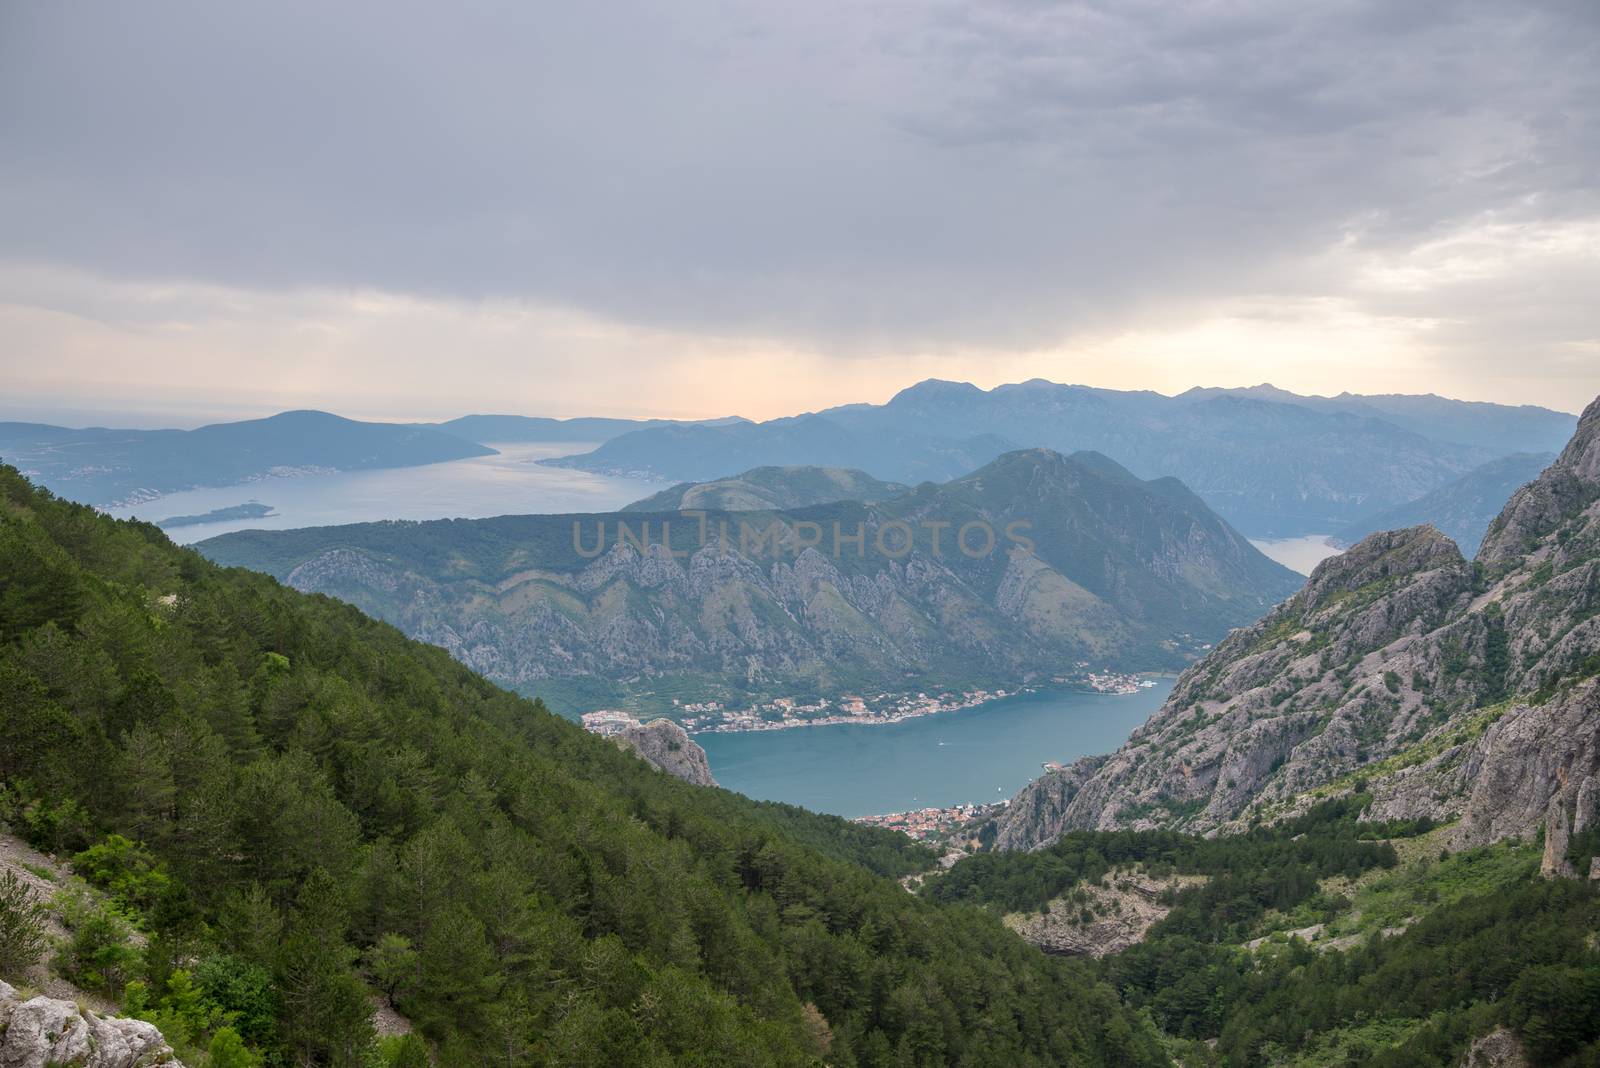 Bay of Kotor in Montenegro, Adriatic coast